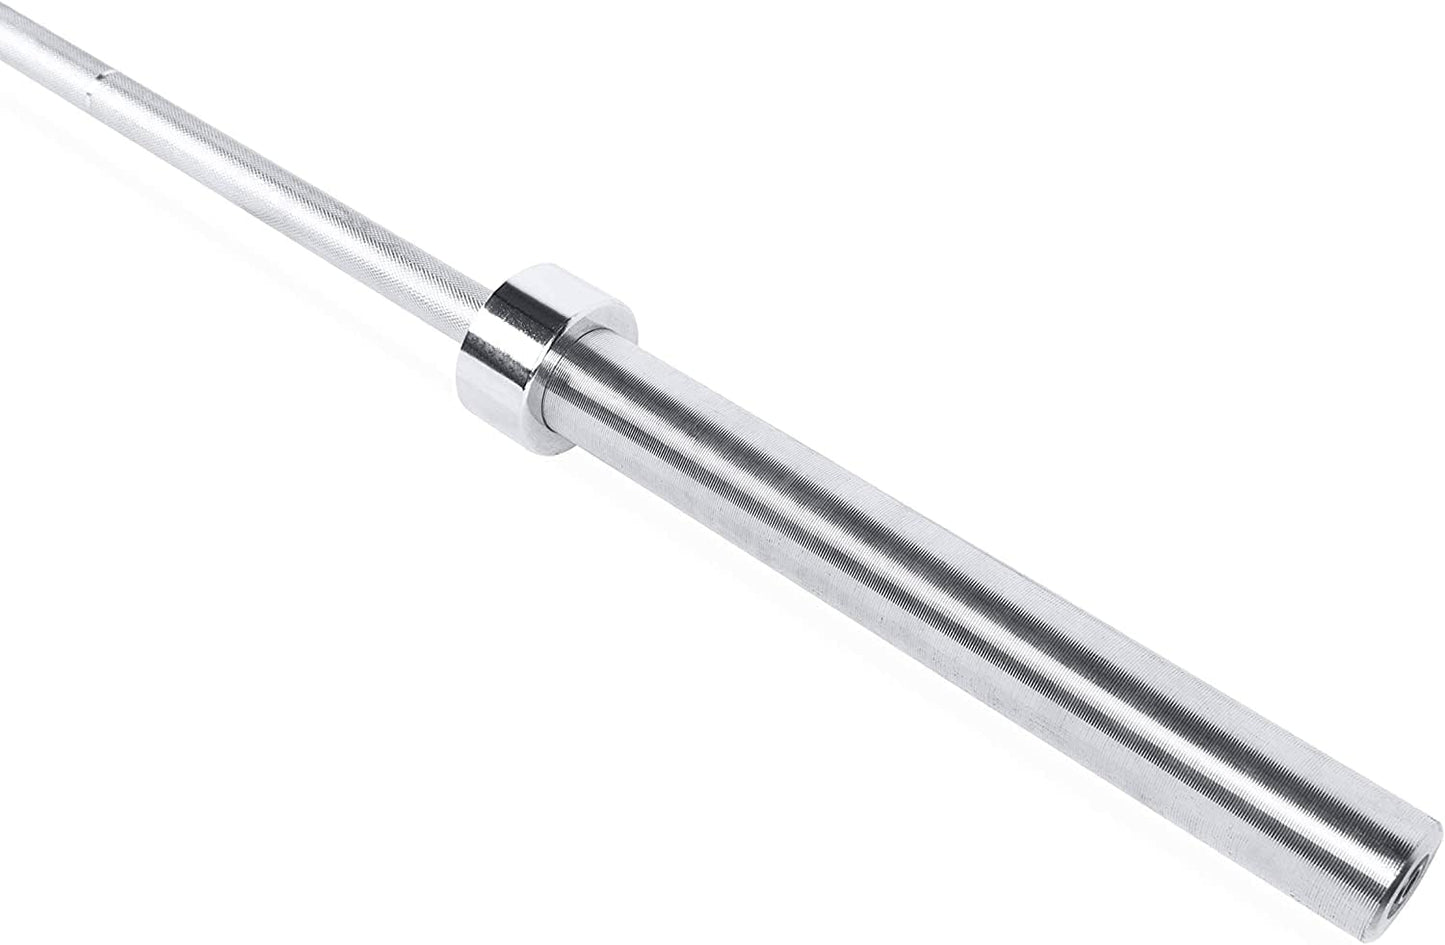 CAP Barbell Olympic 7 ft Bar 44 lb, 28mm Grip Diameter, Chrome - New Version (OBIS-85C)